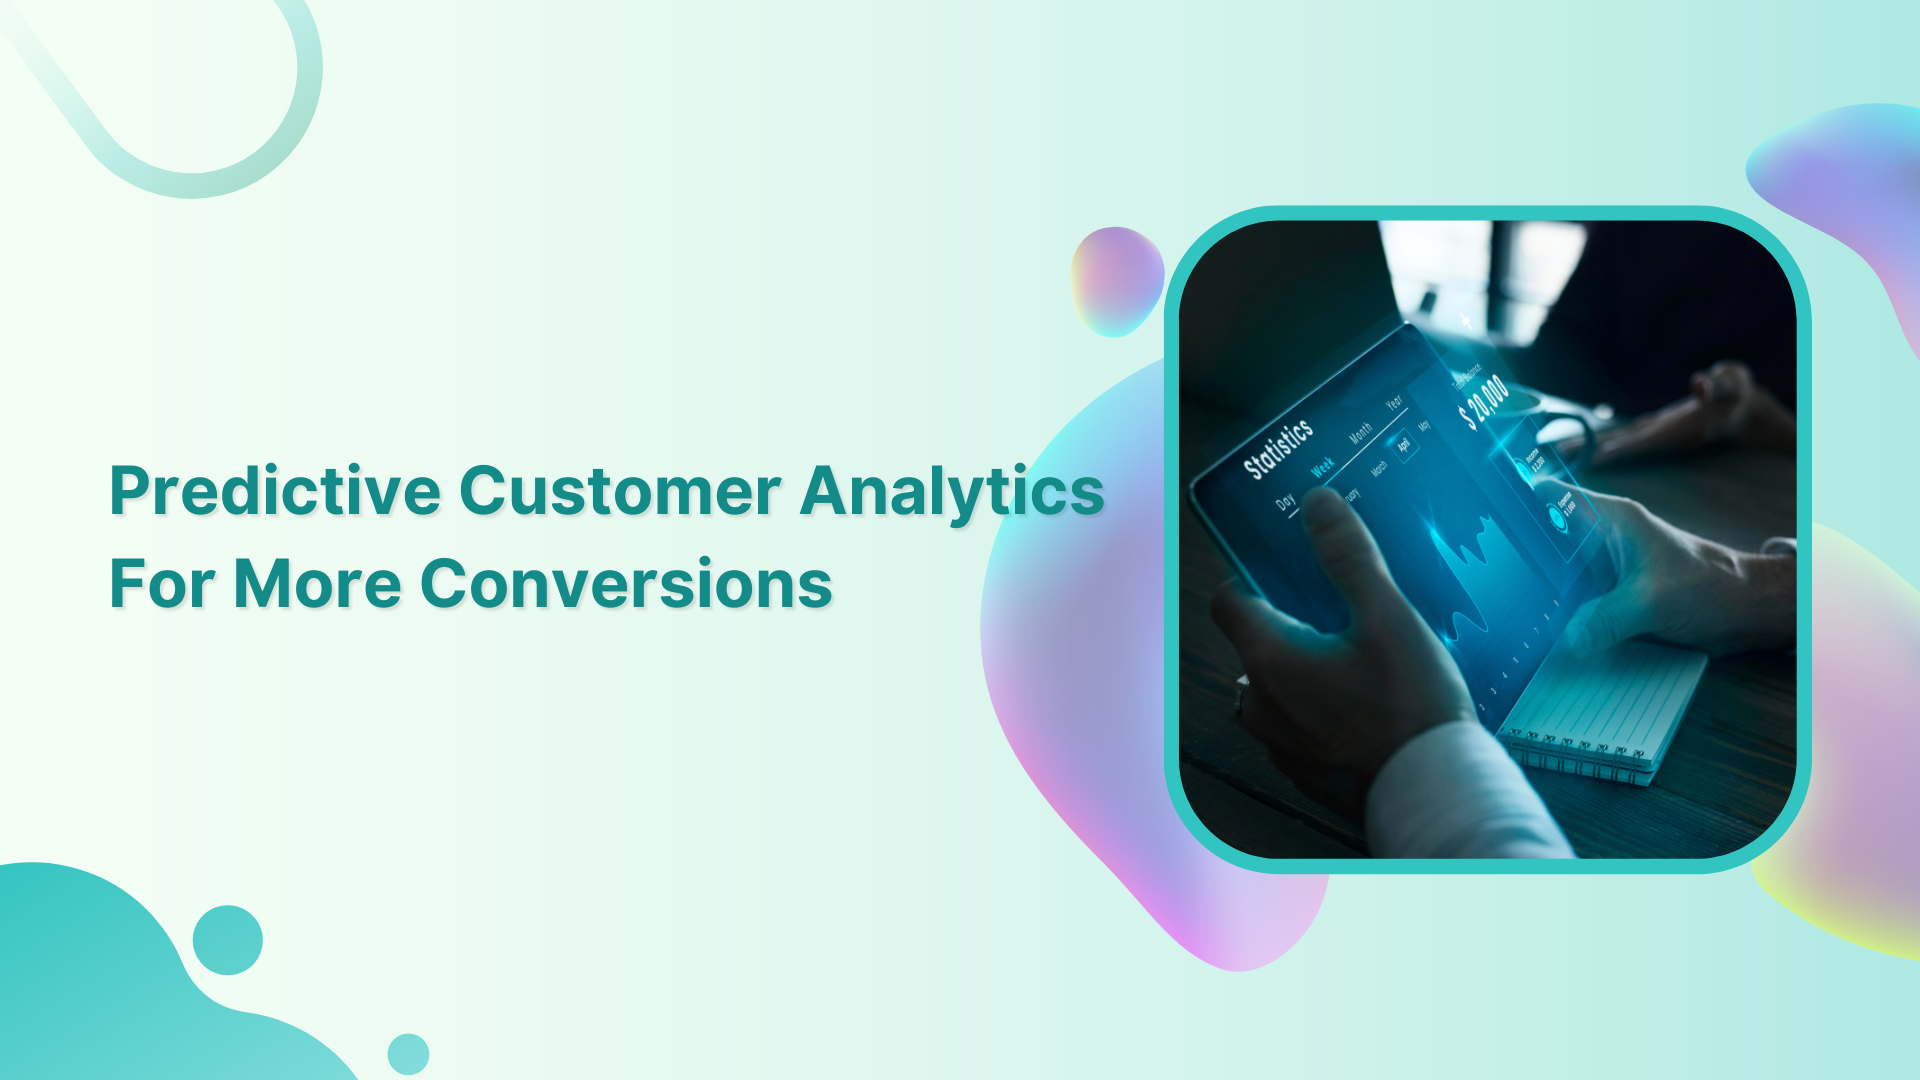 Using Predictive Customer Analytics For More Conversions